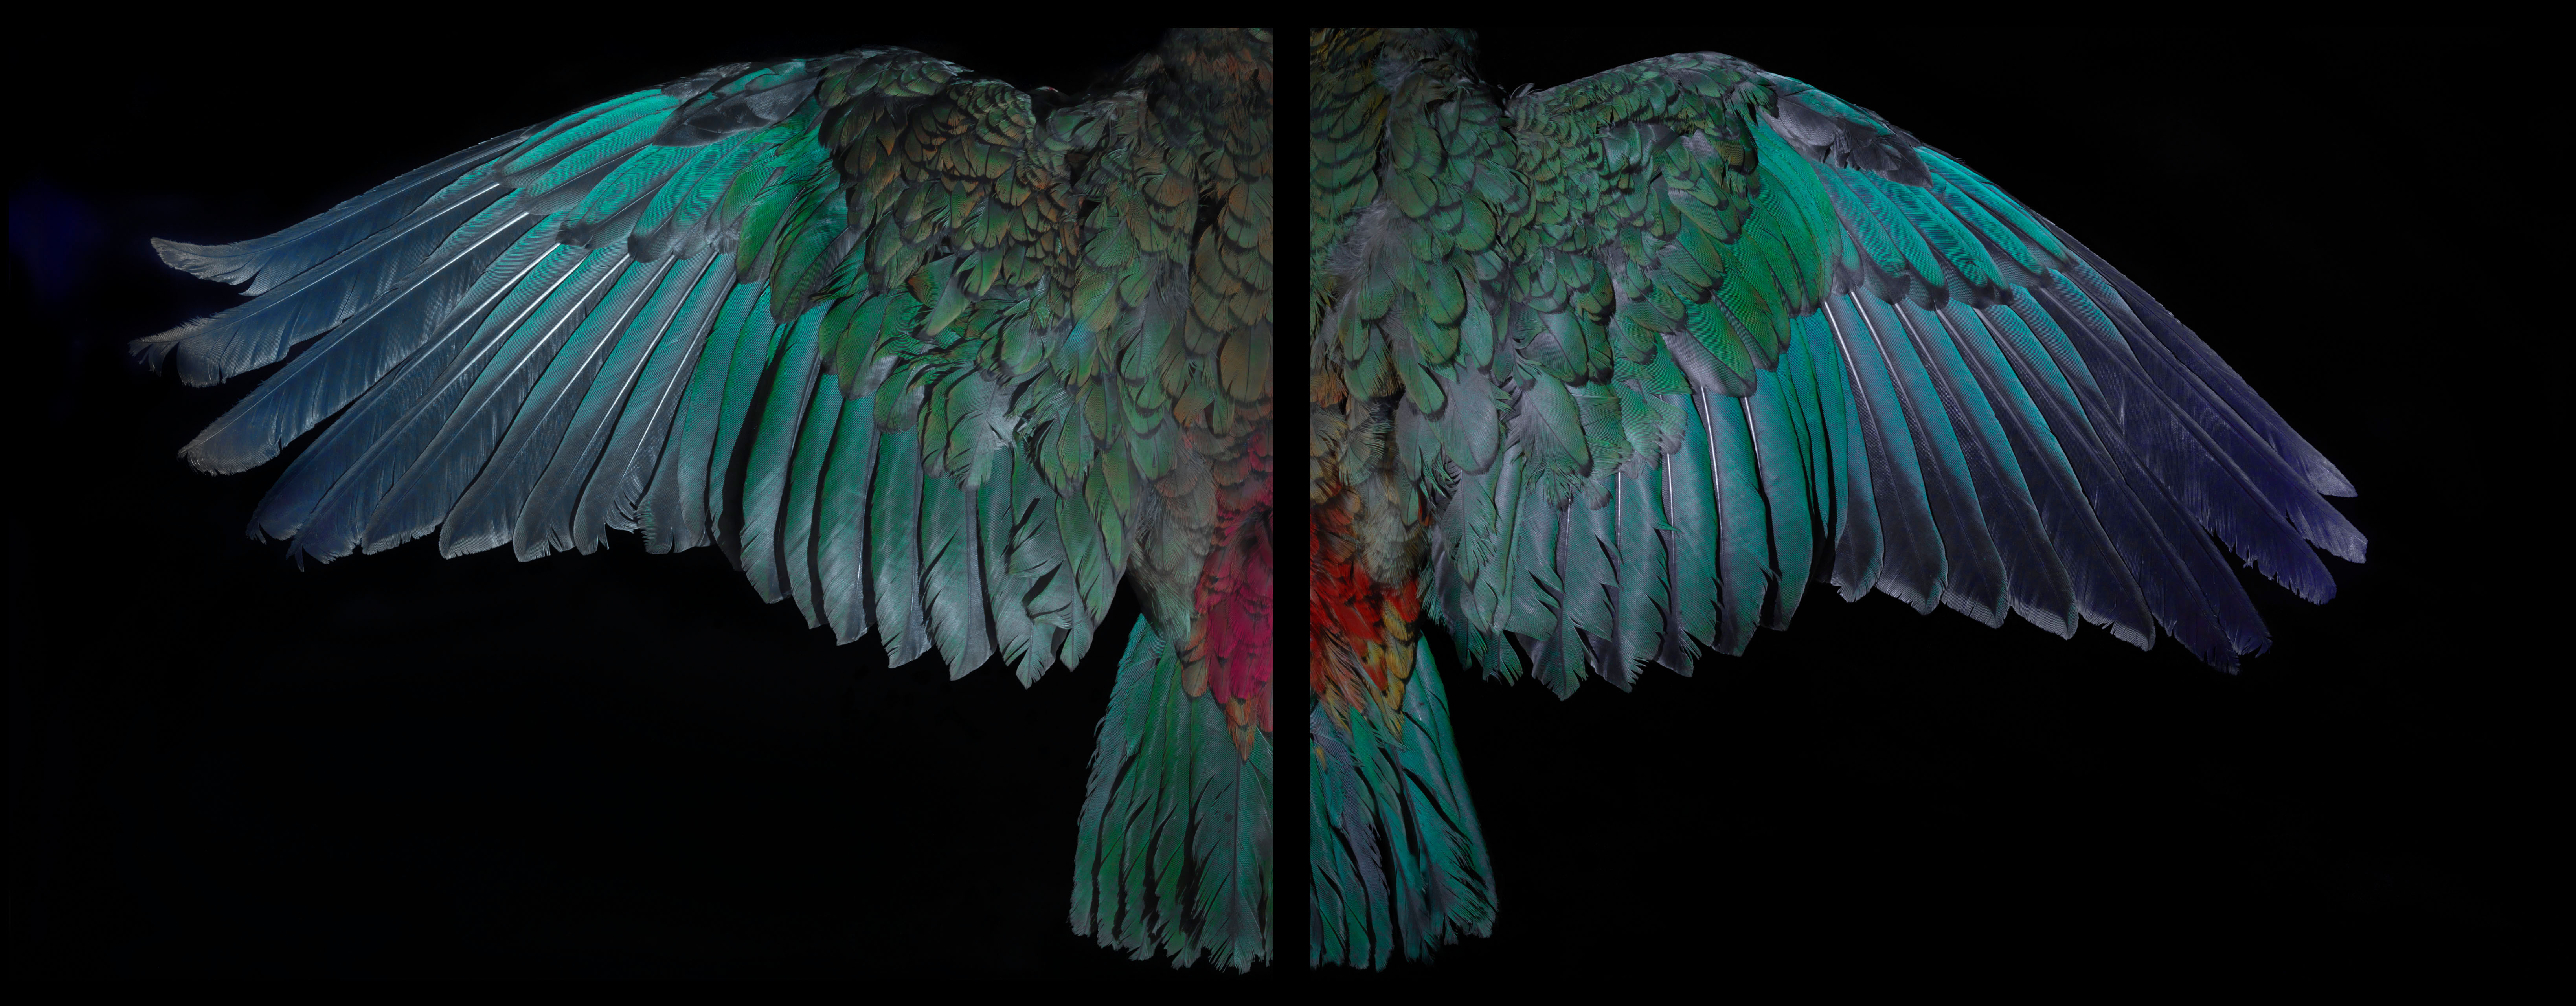 <p><strong>Fiona Pardington</strong>&nbsp;<em>Davis Kea Wings (above)</em>, 2015. Courtesy of the Artist and Starkwhite, Auckland.</p>
